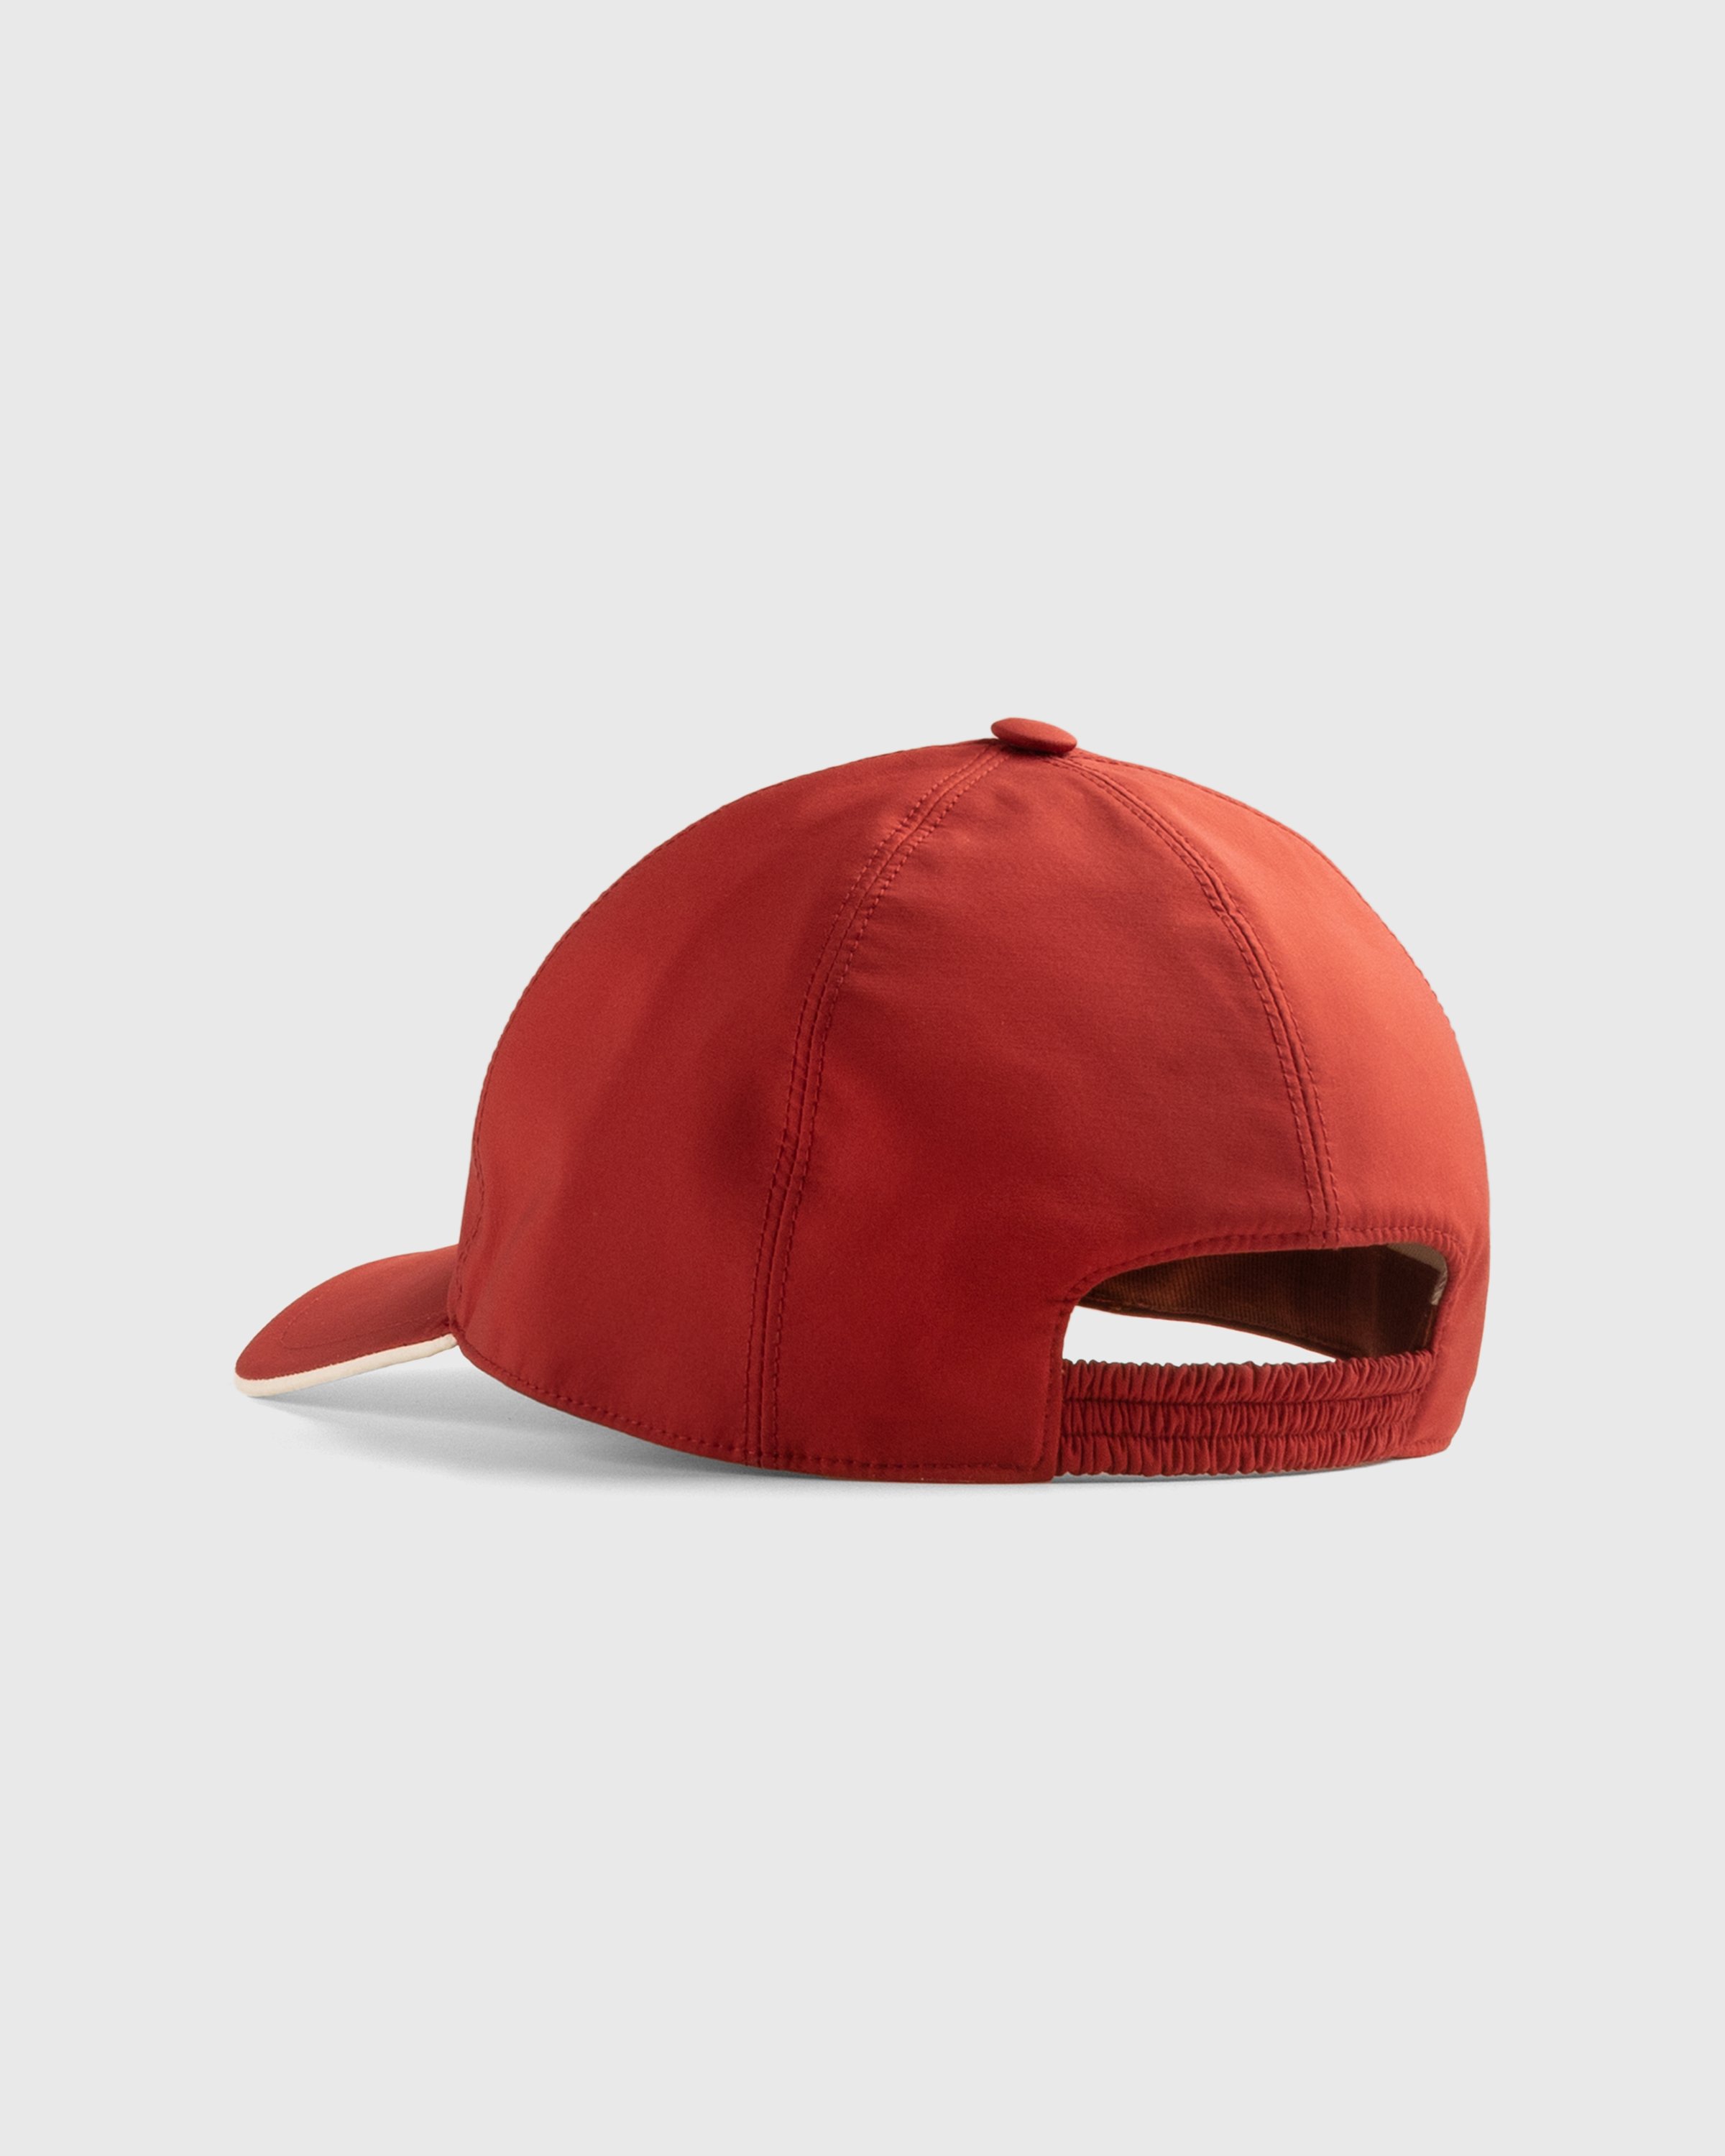 Loro Piana - Bicolor Baseball Cap Hibiscus / Ivory - Accessories - Red - Image 3